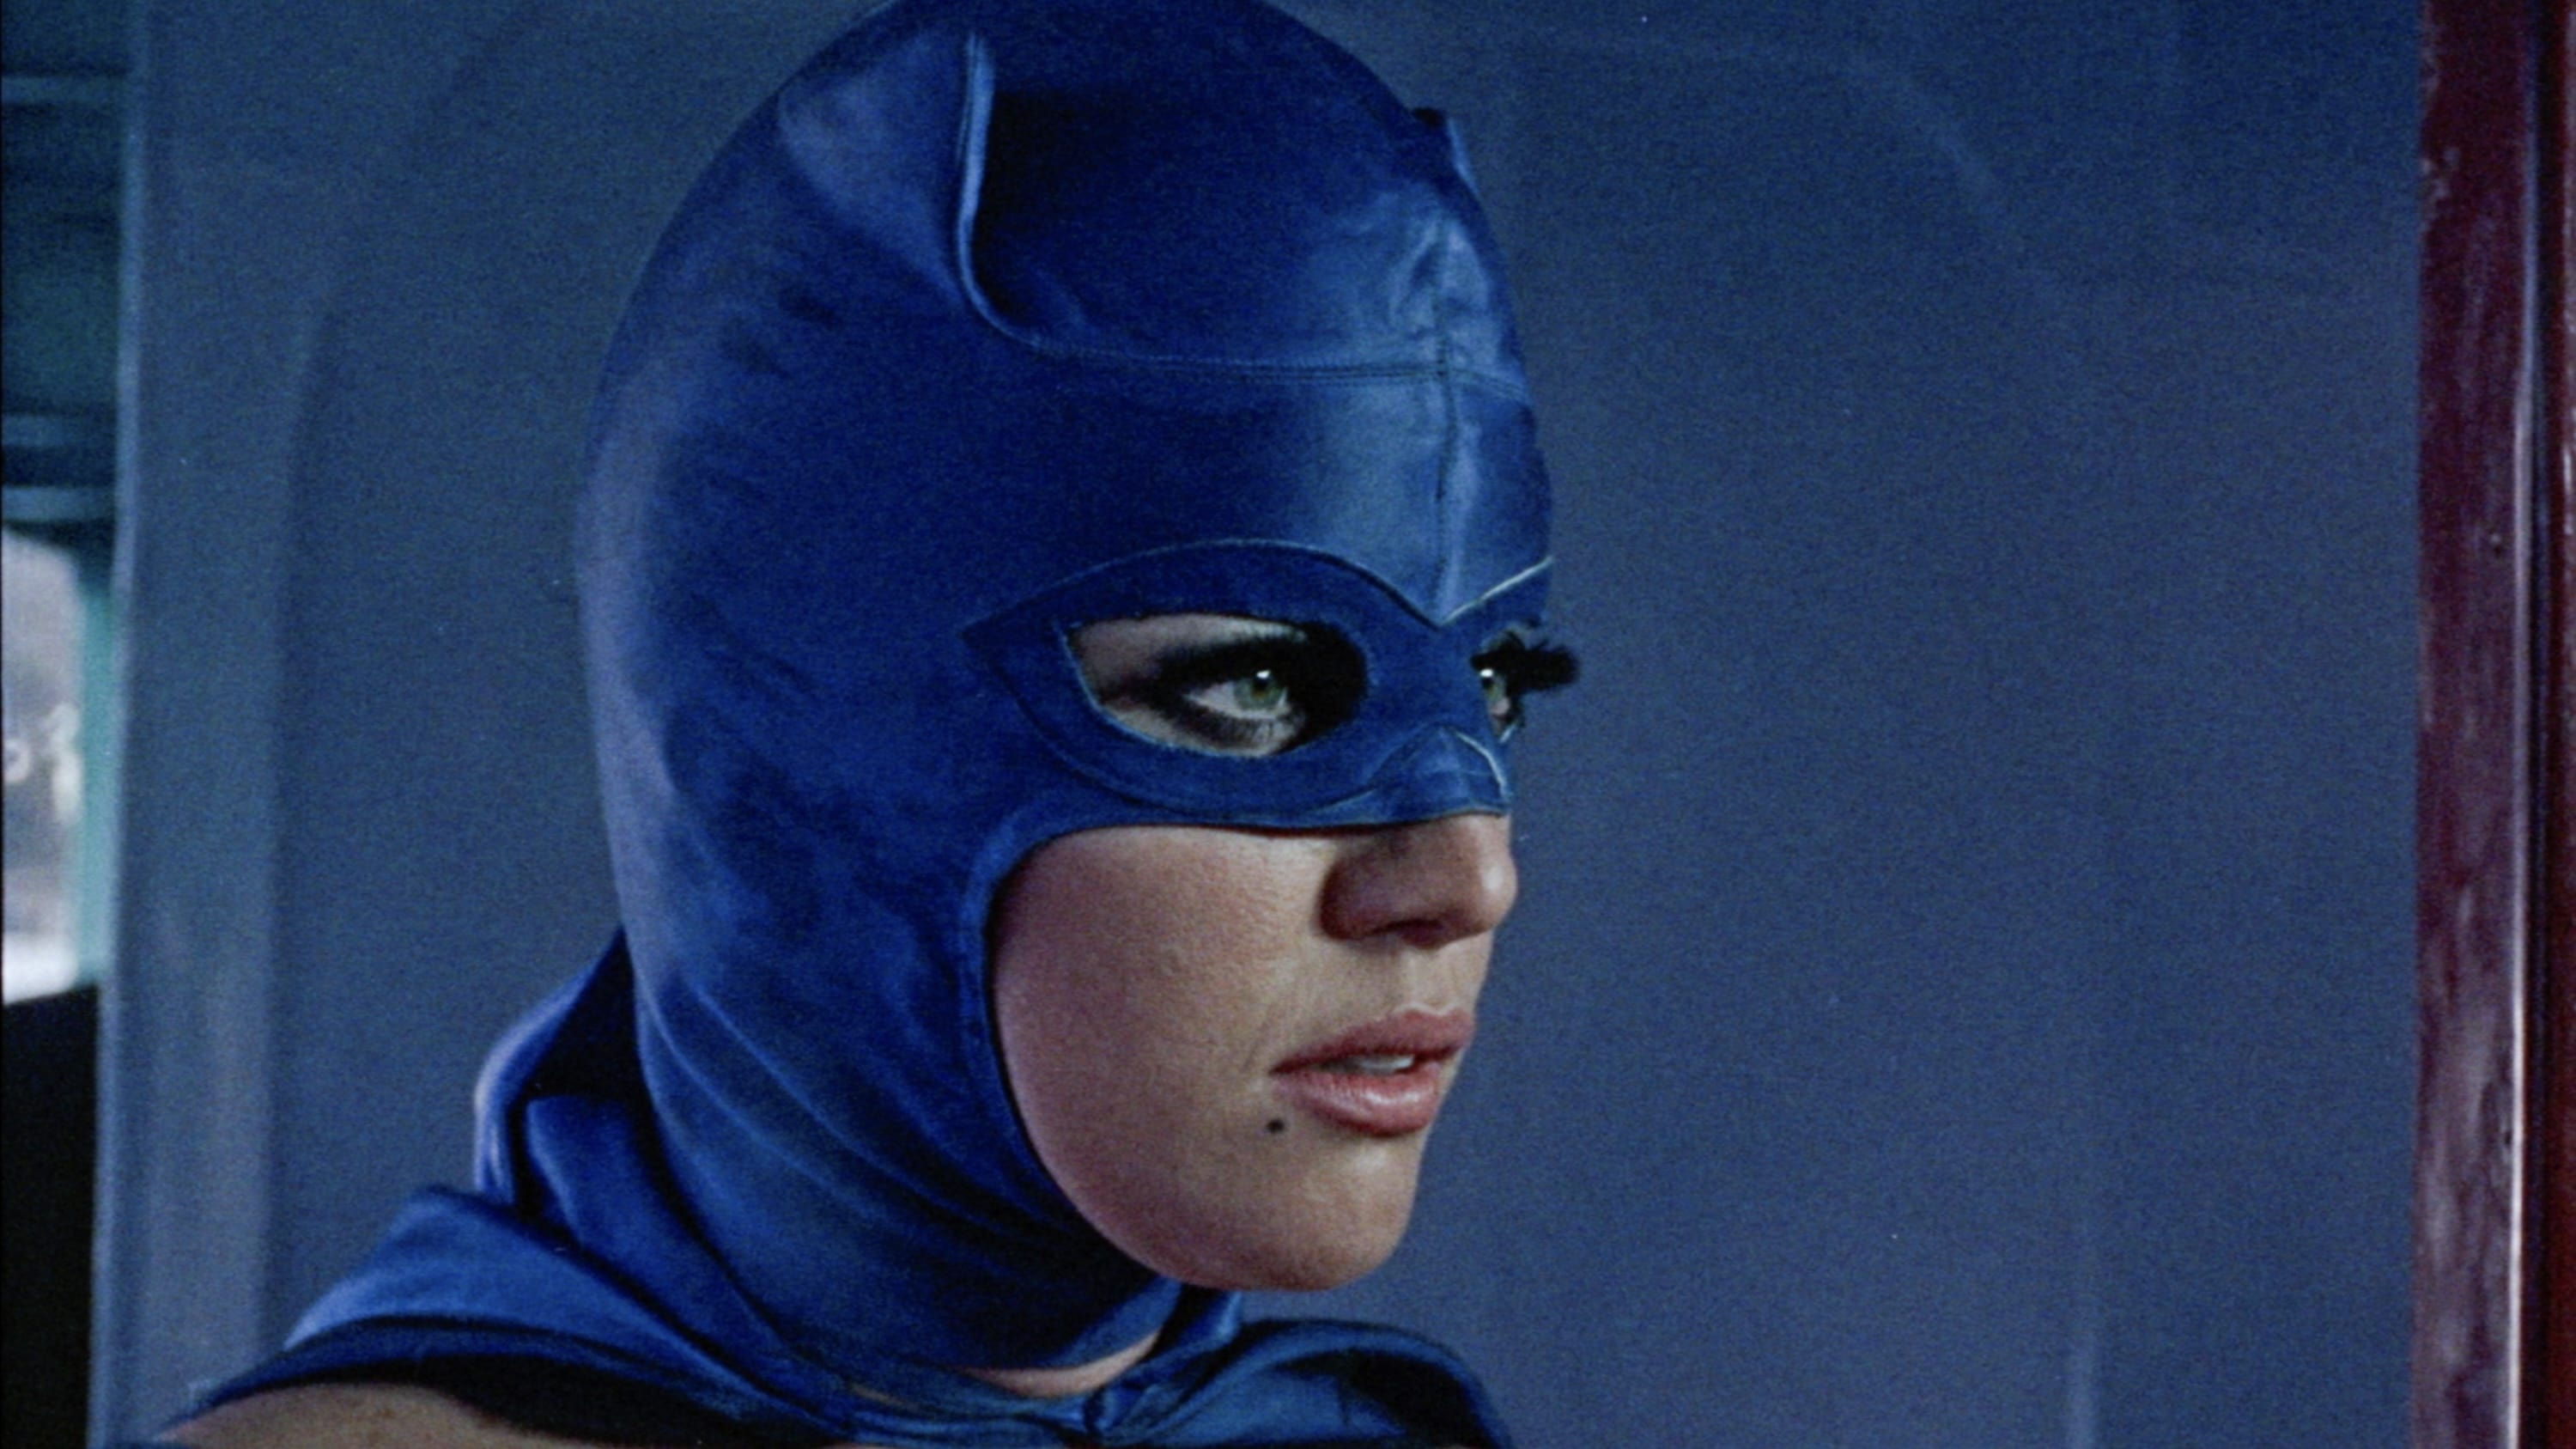 La mujer murciélago (1968)